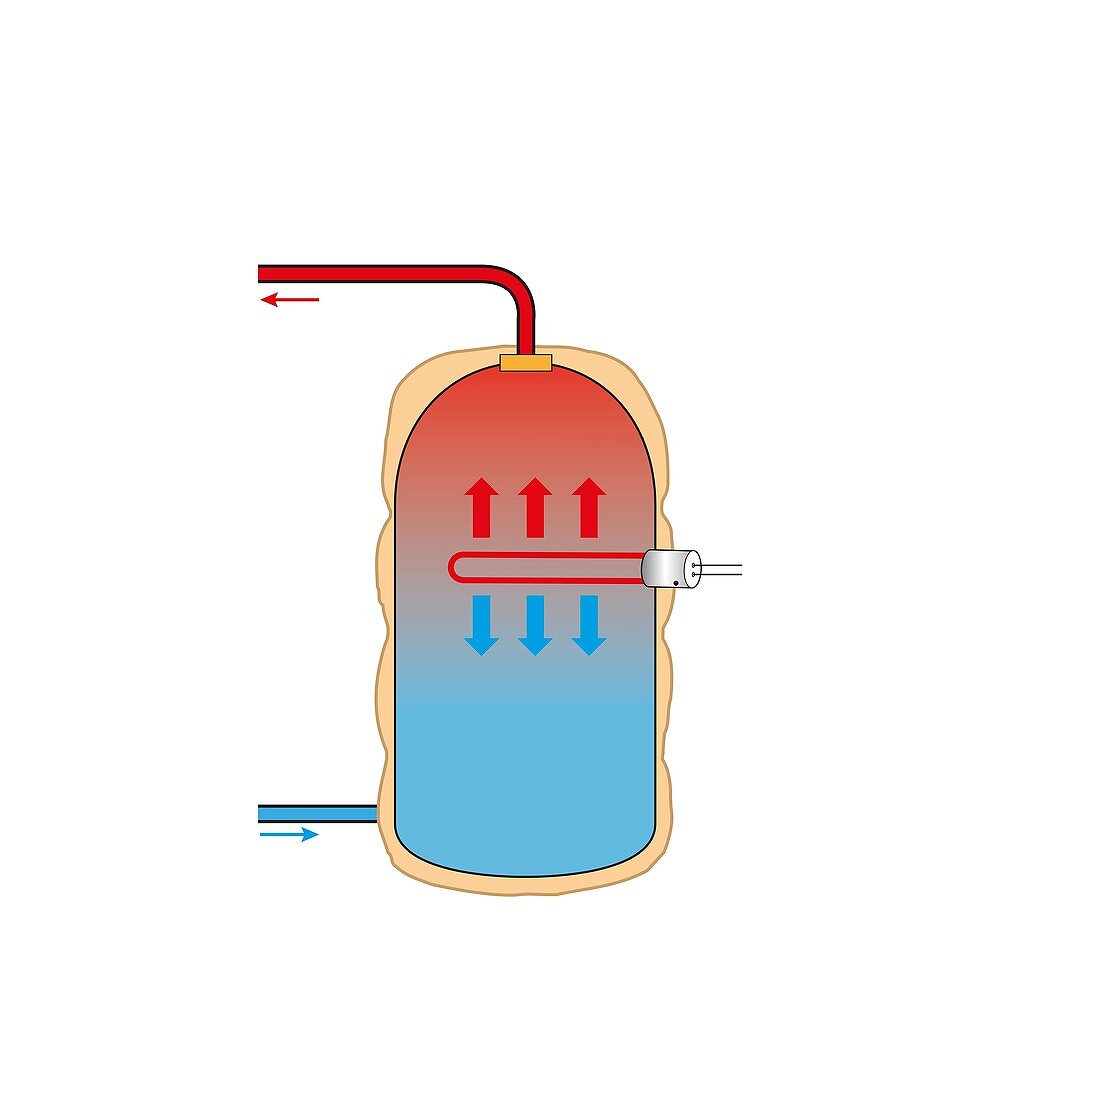 Immersion heater, illustration